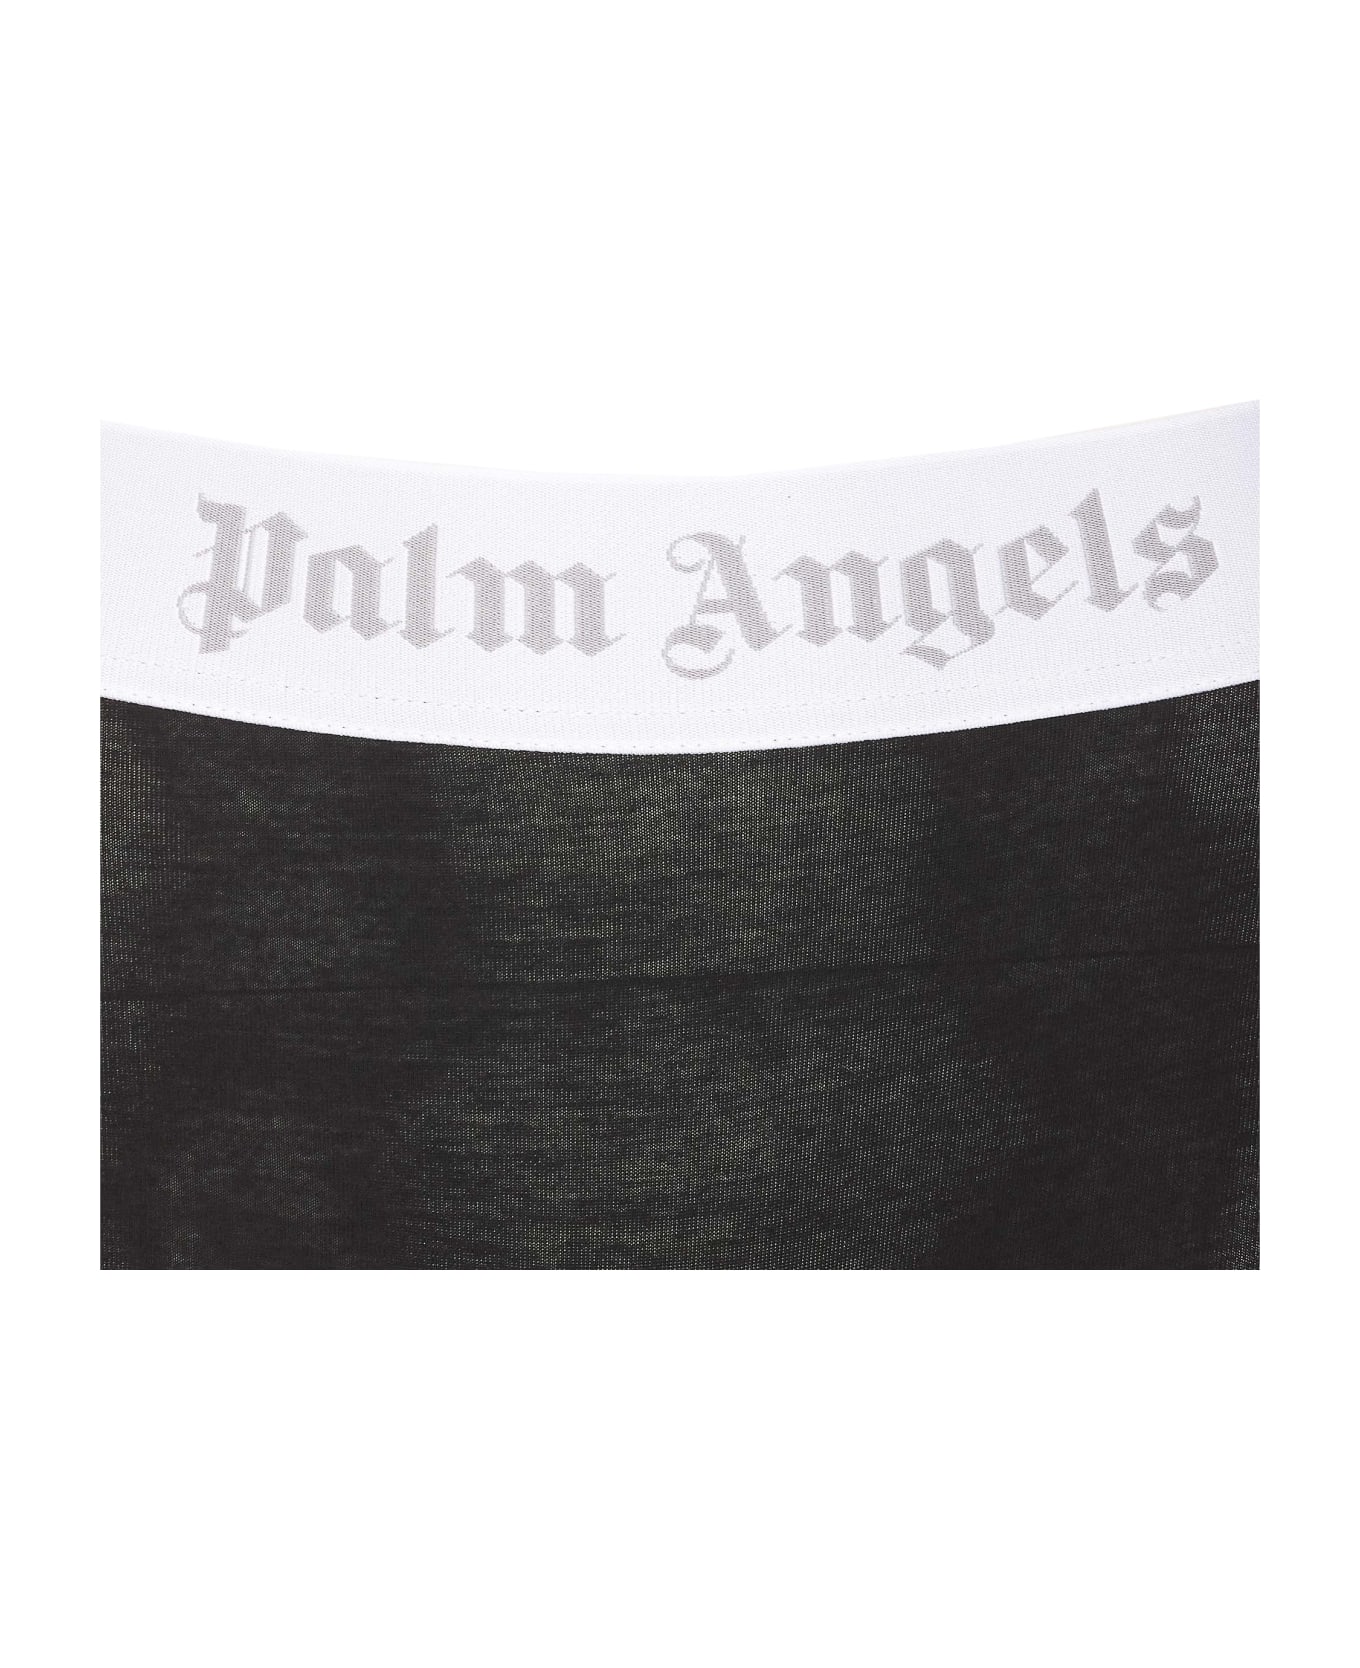 Palm Angels Classic Logo High Brazil Slip - BLACK ショーツ